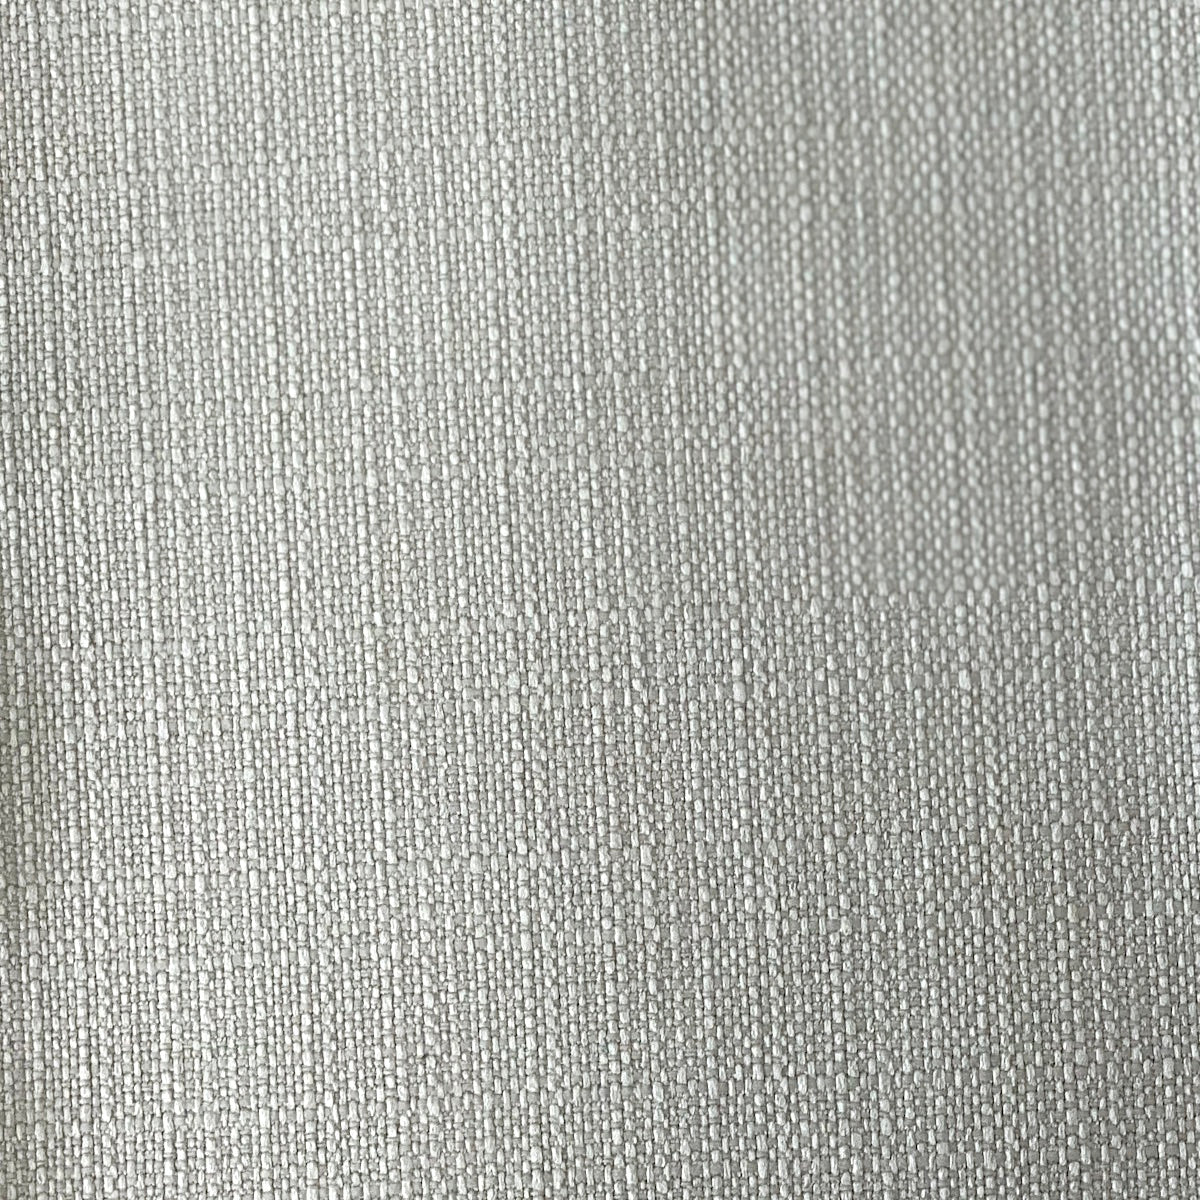 Silver Breda Linen Upholstery Drapery Fabric - Fashion Fabrics LLC